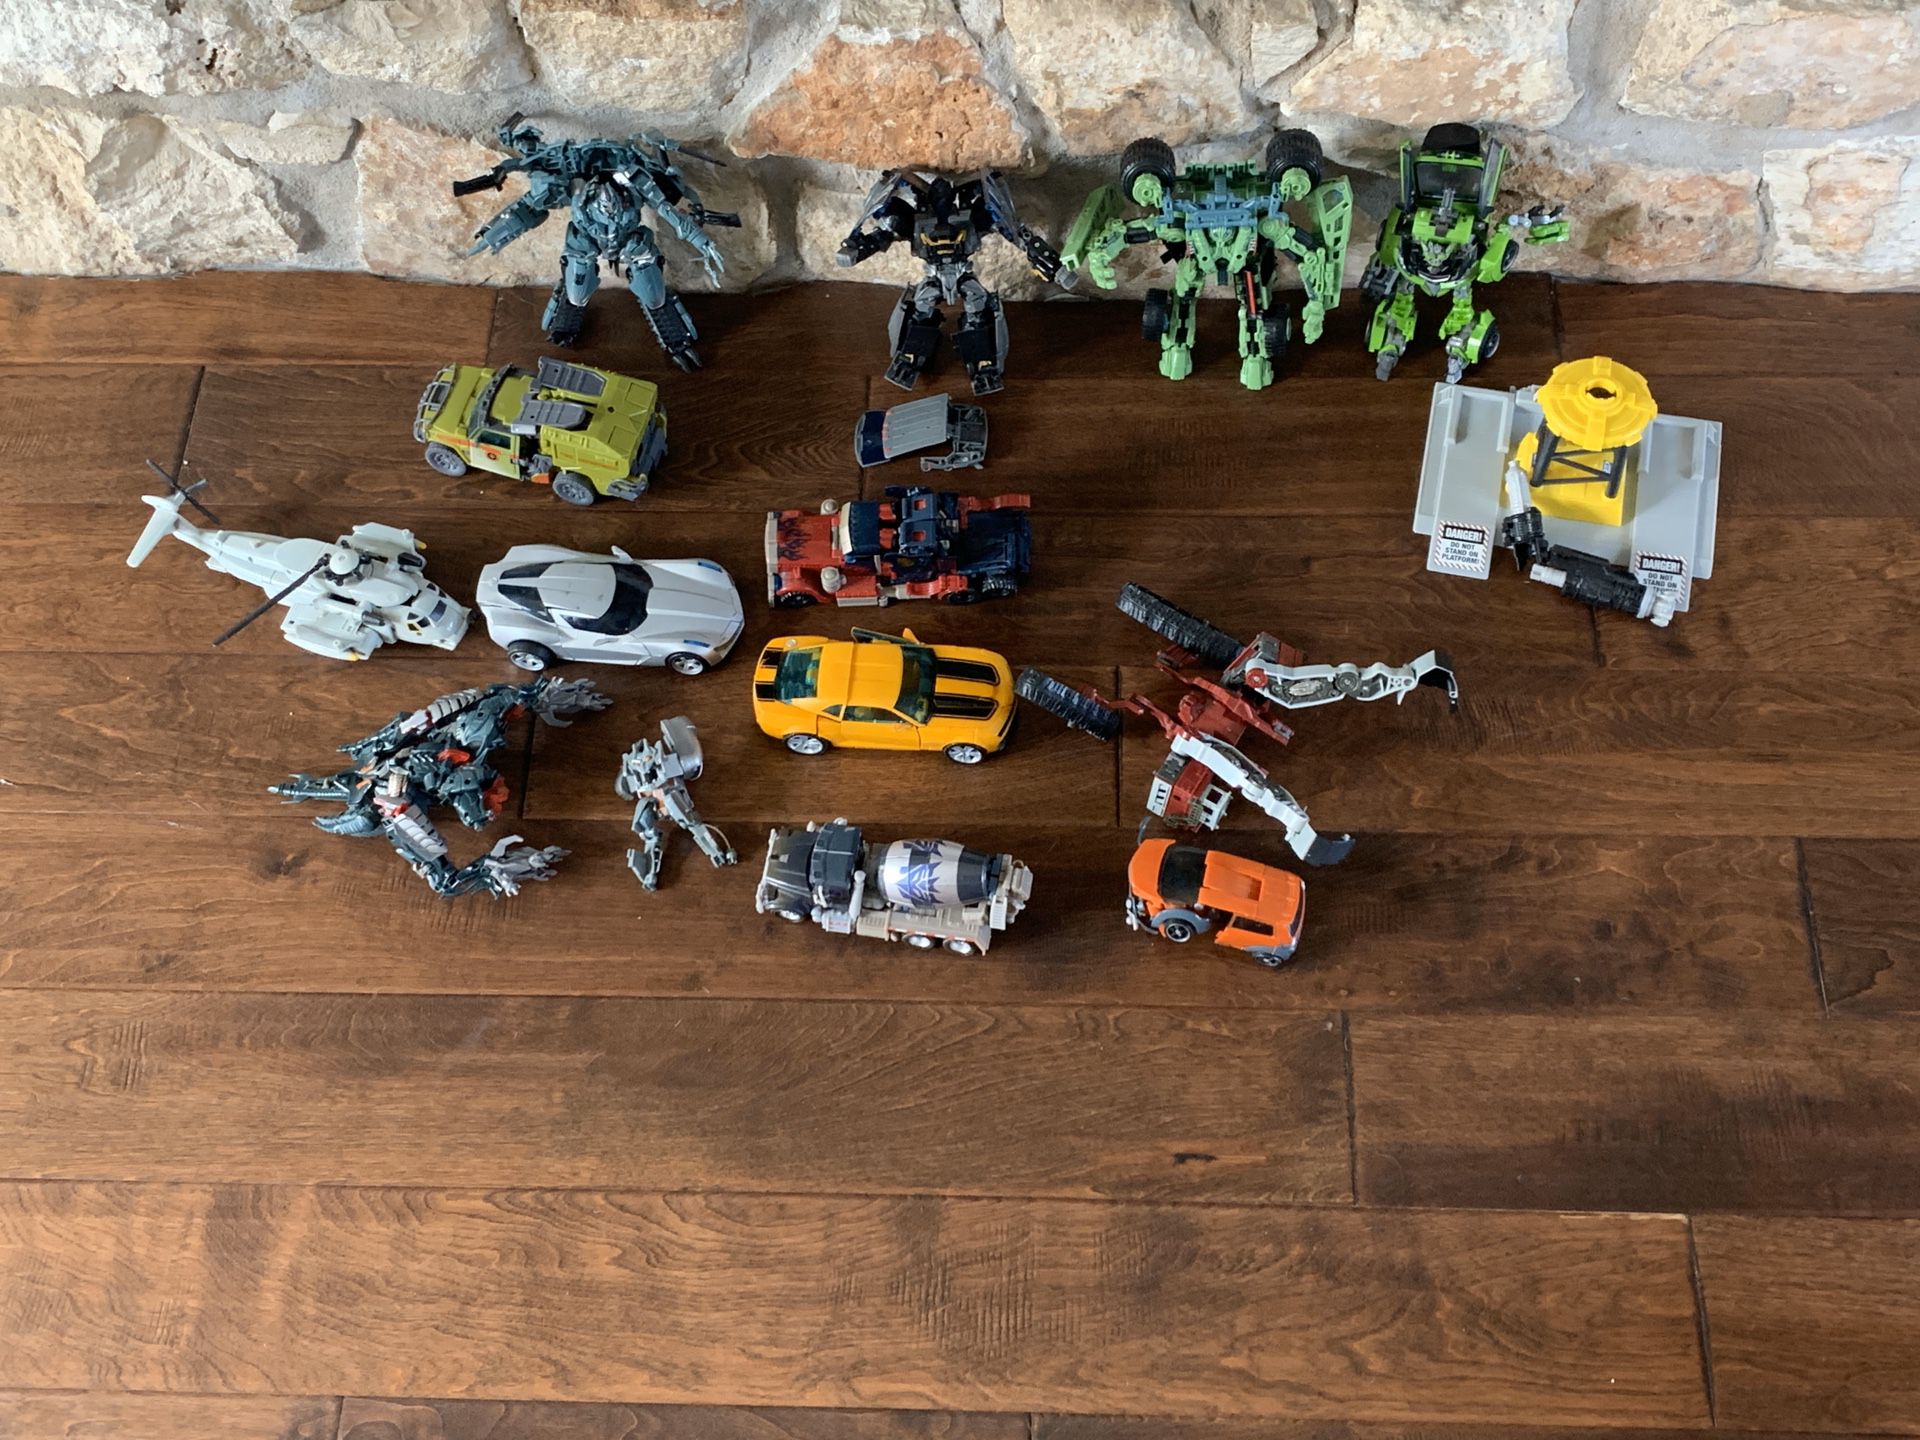 13 Transformer toys